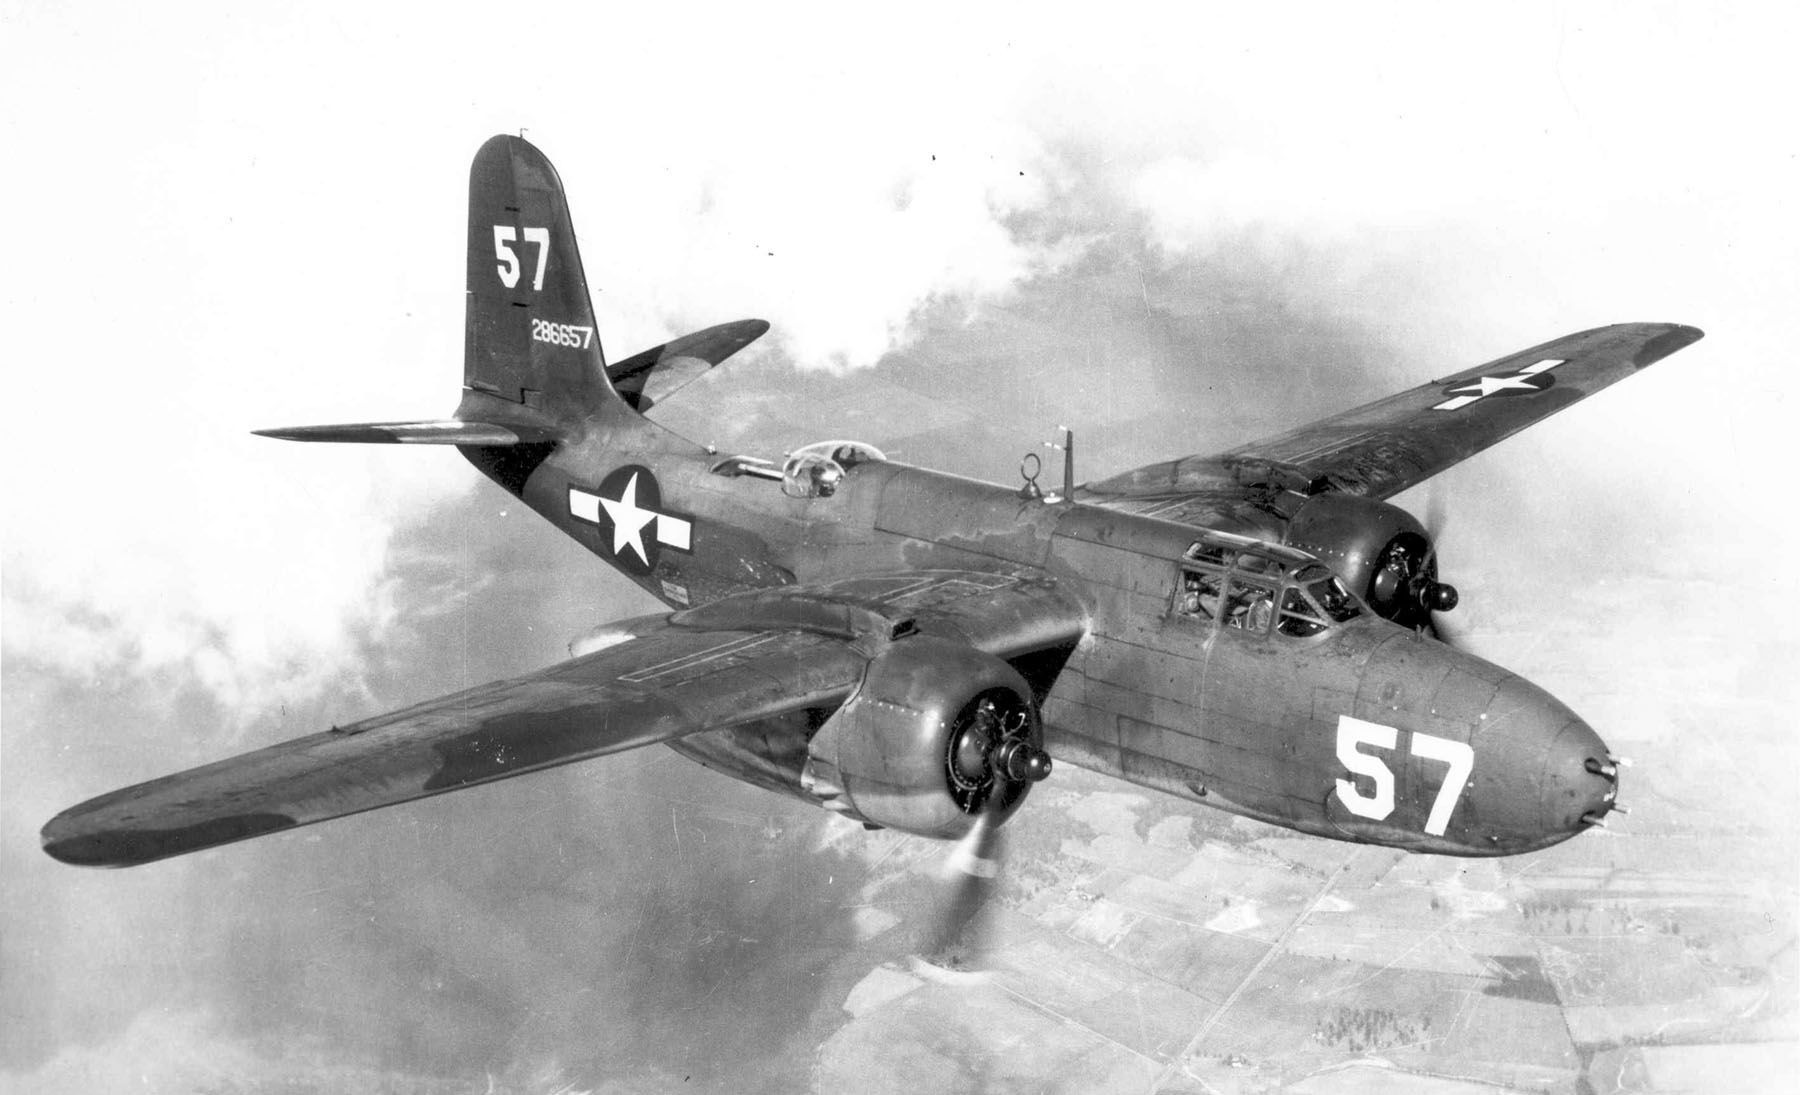 Douglas A-20